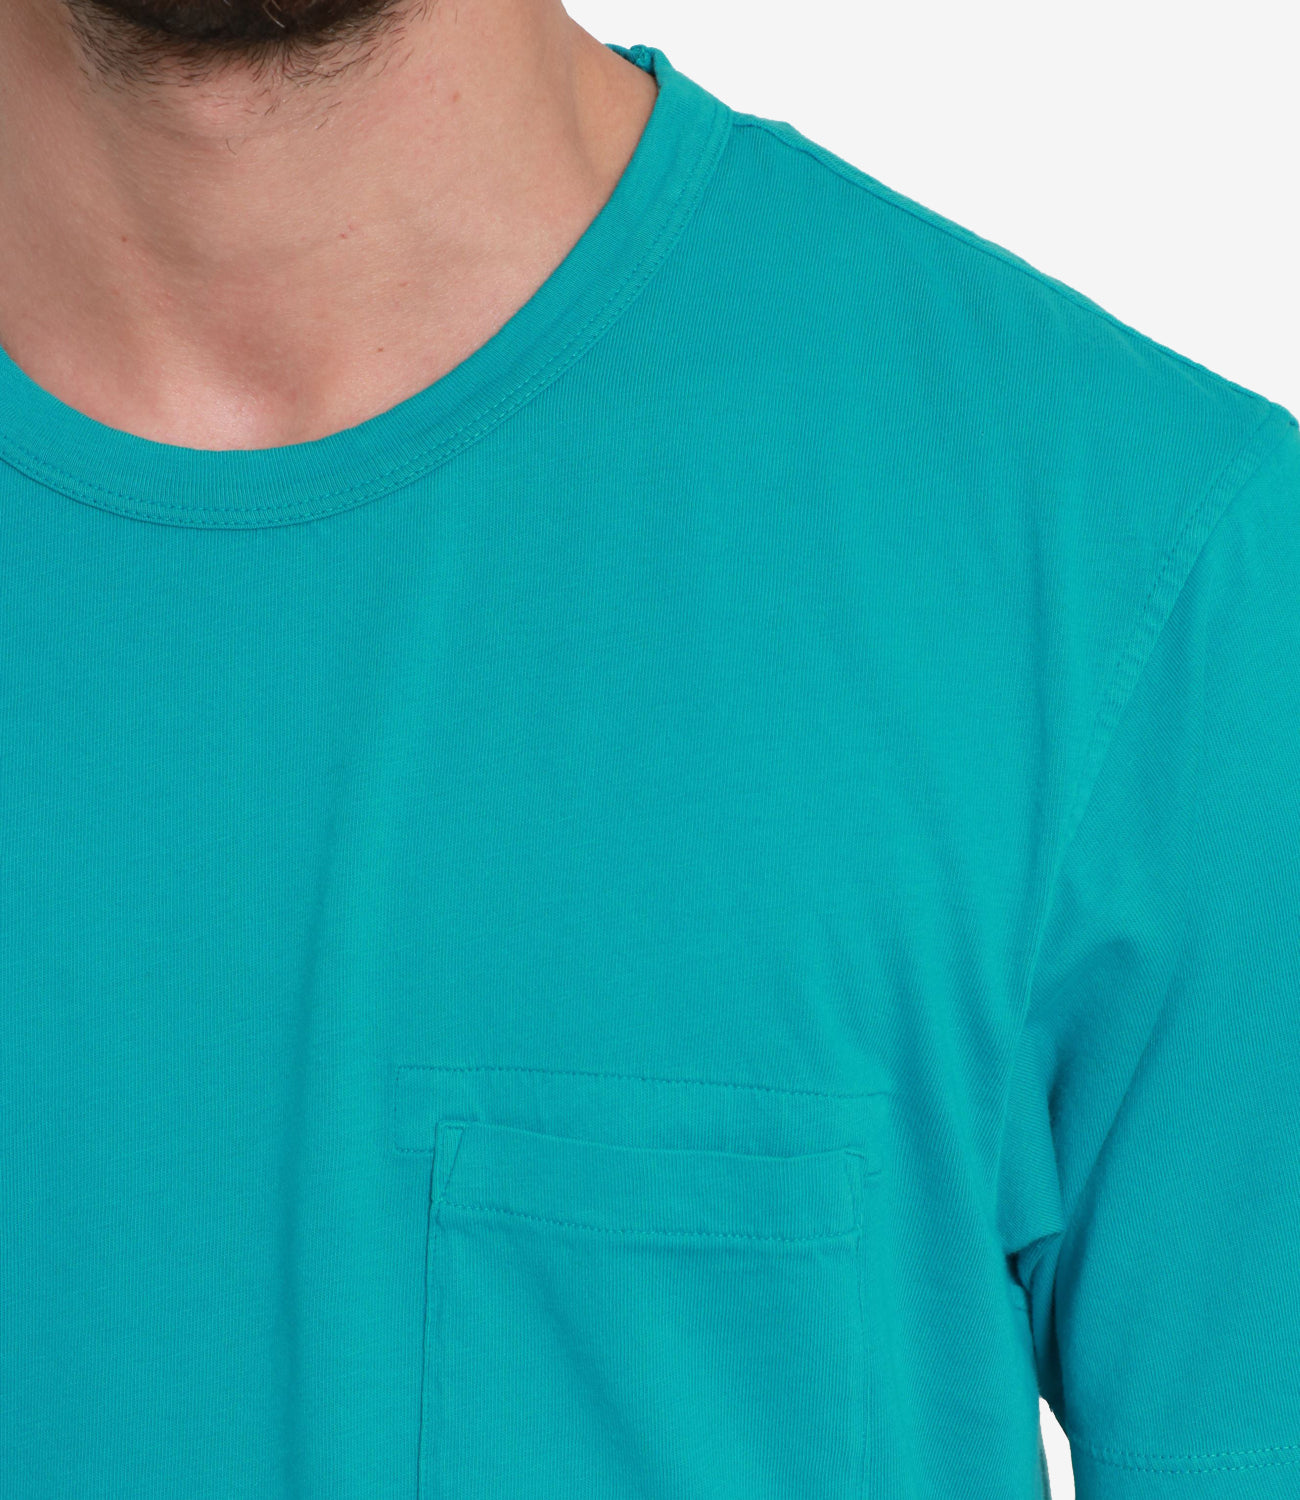 C.P. Company | T-Shirt Jersey Pocket Turchese